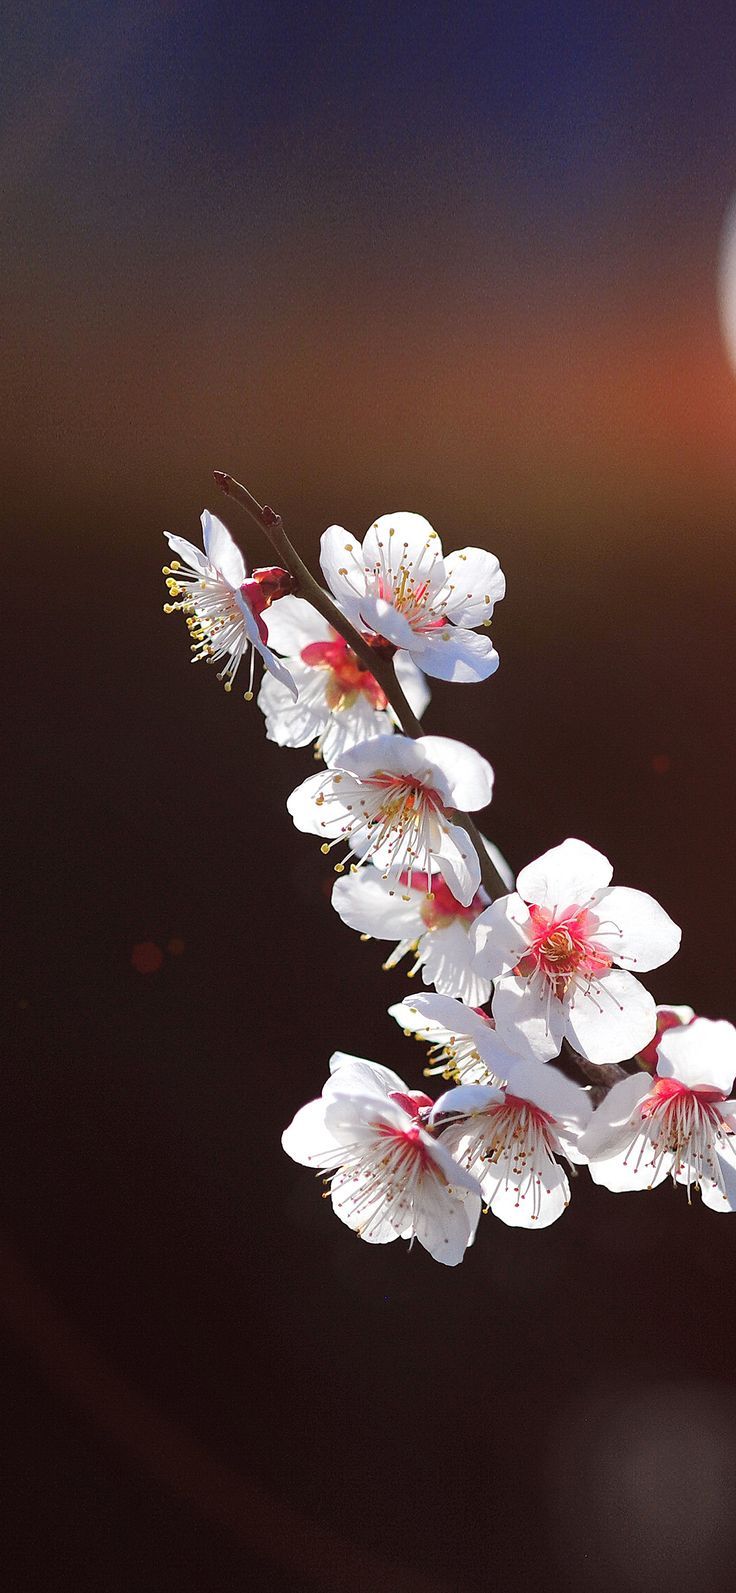 iPhone X wallpaper, spring flower sakura nature tree flare